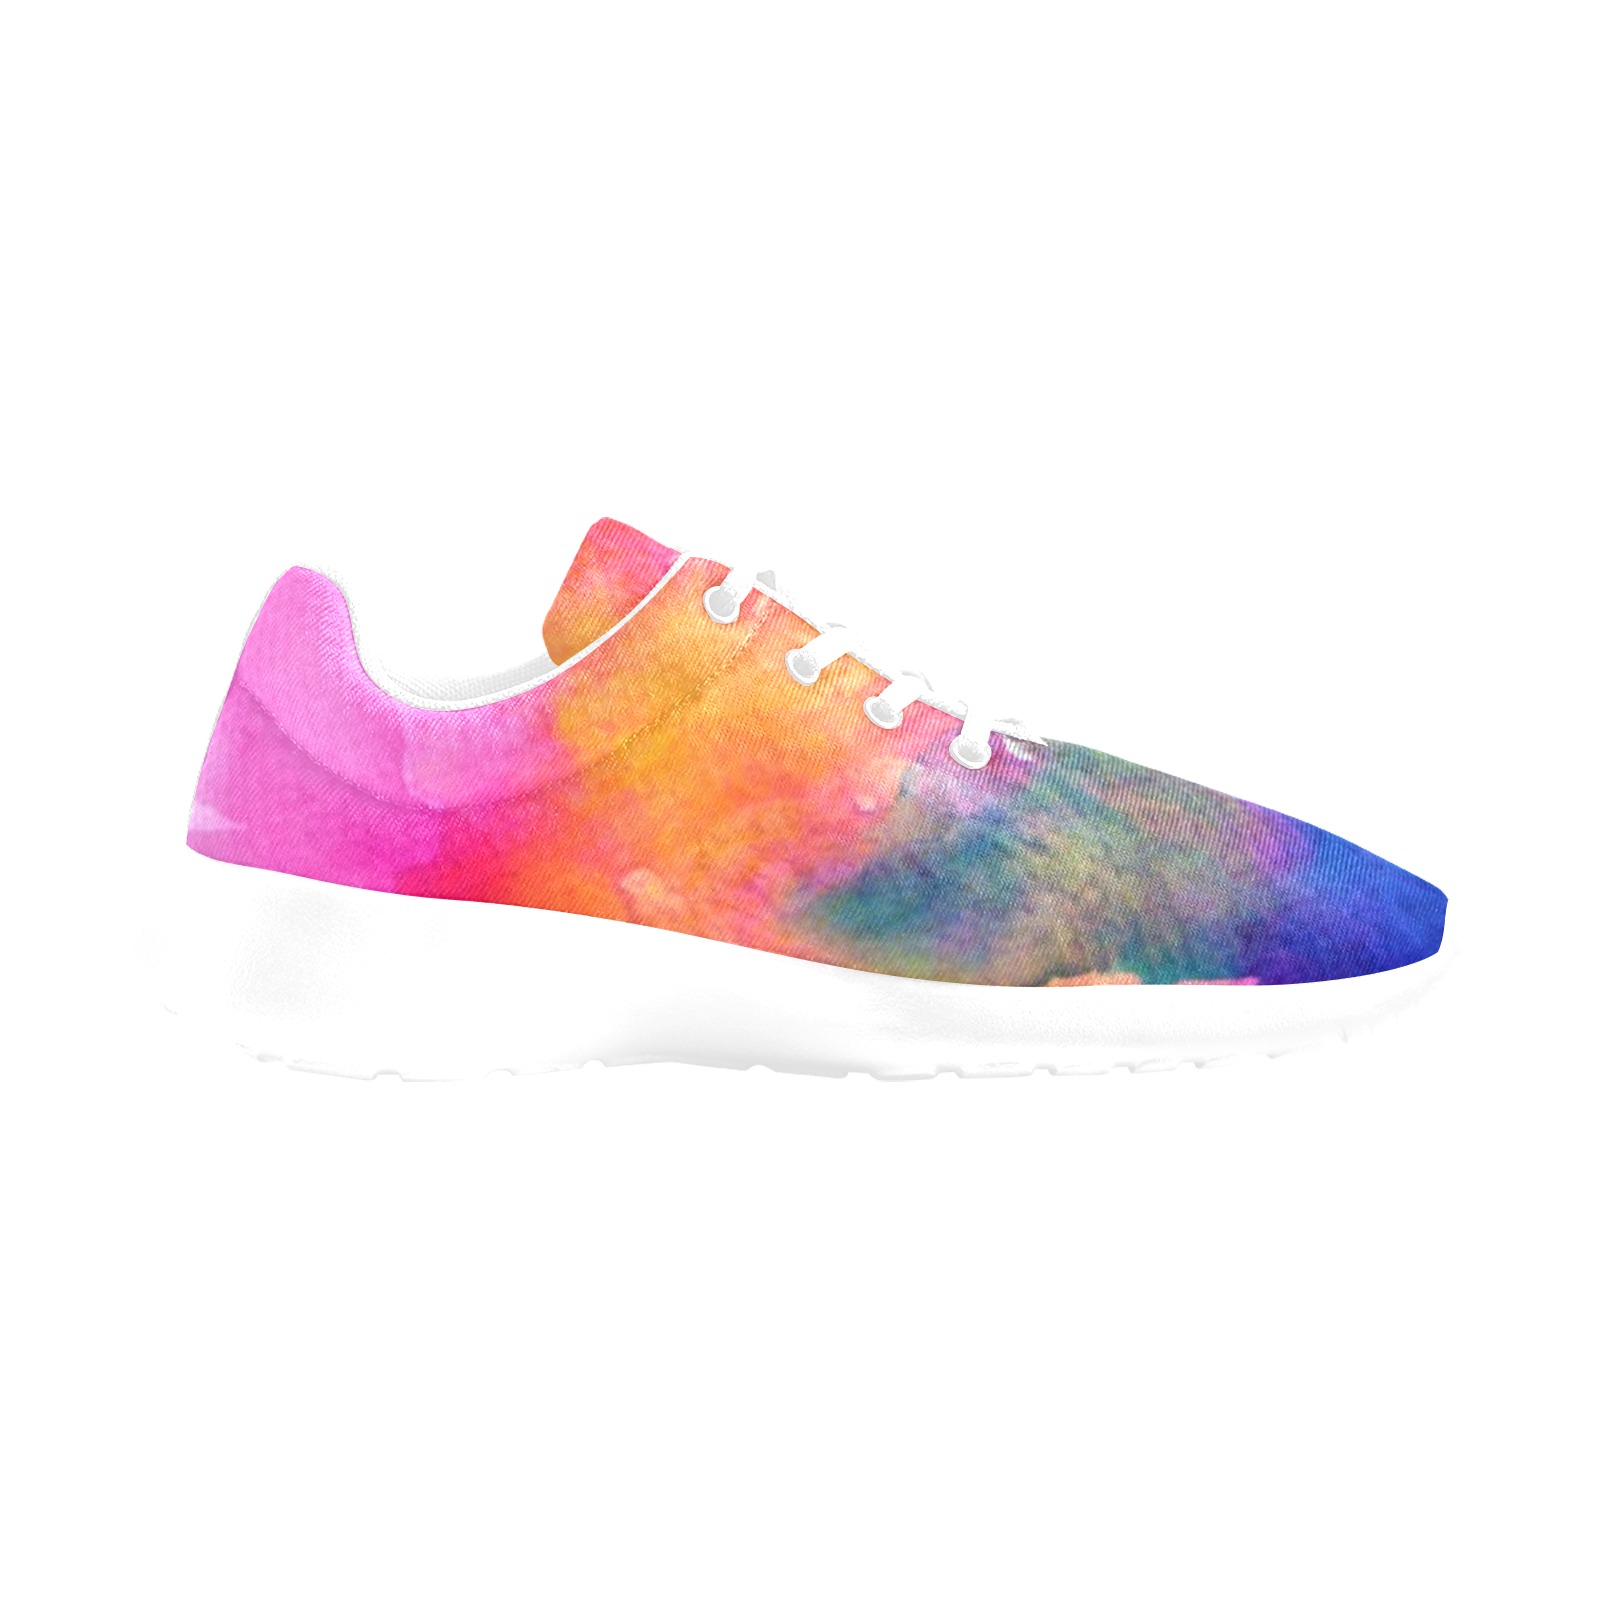 Watercolor Rainbow Women's Athletic Shoes (Model 0200)